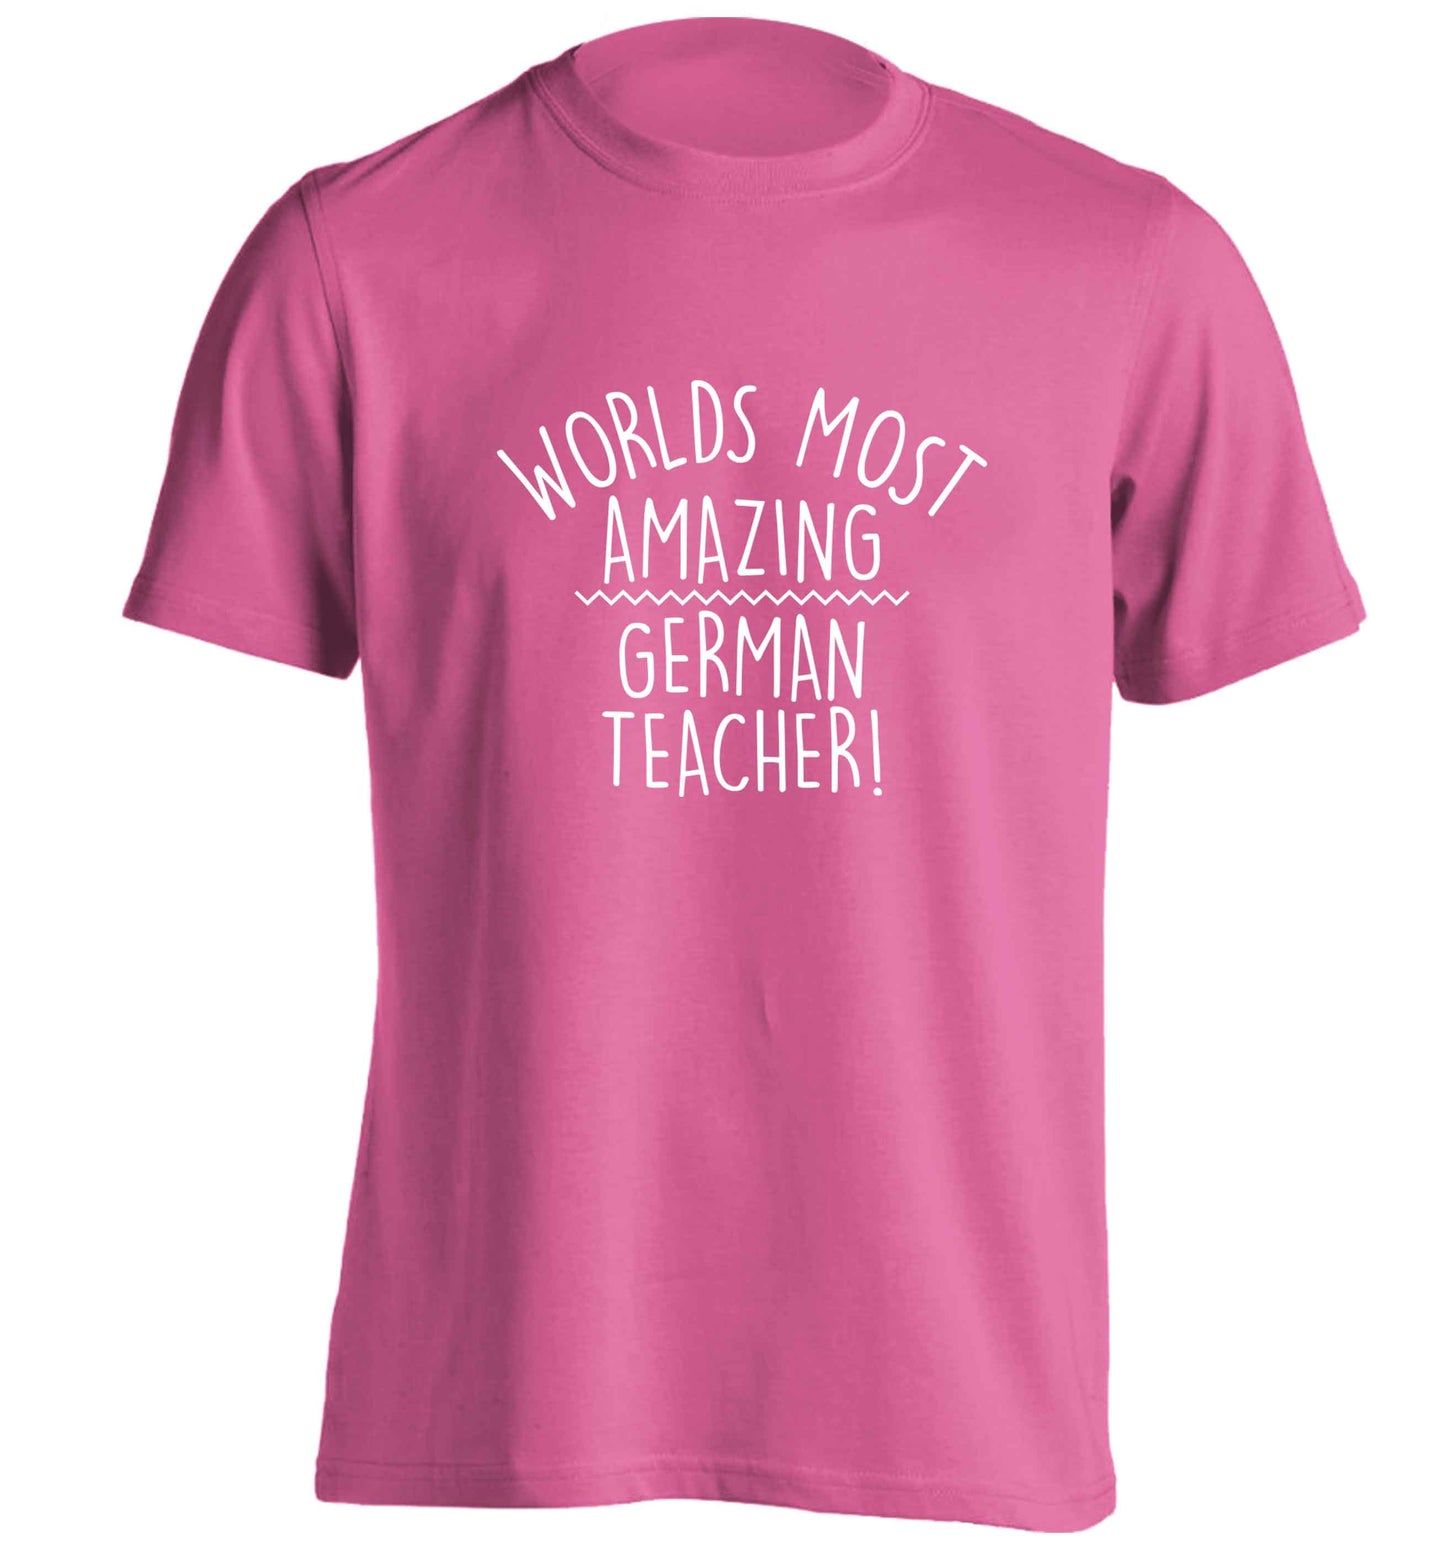 Worlds most amazing German teacher adults unisex pink Tshirt 2XL